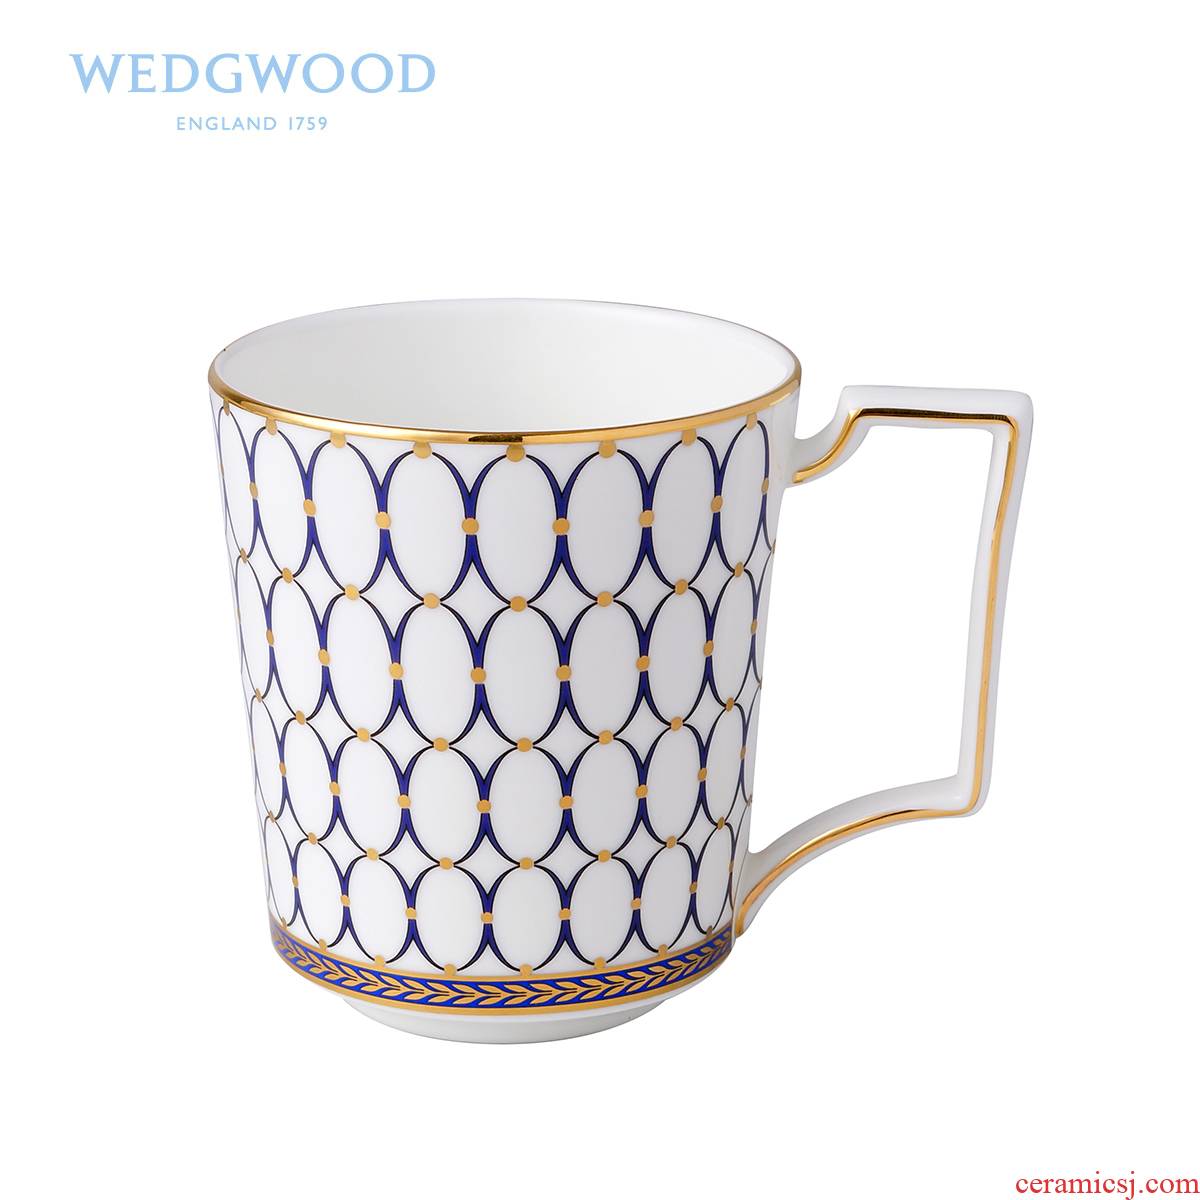 Wedgwood Renaissance powders in blue/red ipads China mugs WMF coffee spoon